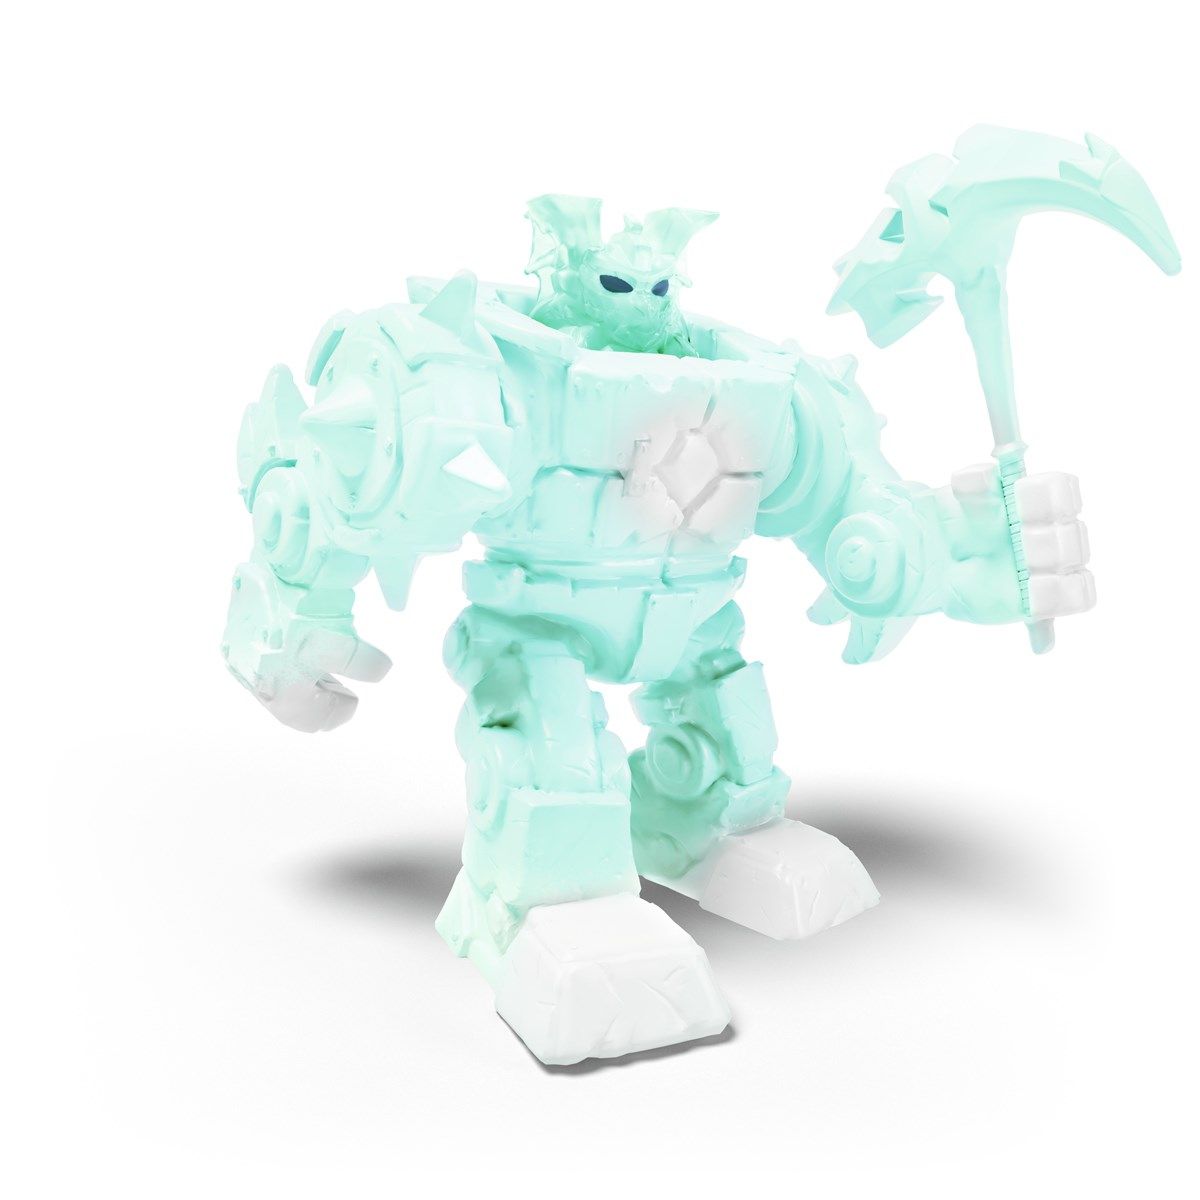 Eldrador, Ice robot mini creatures